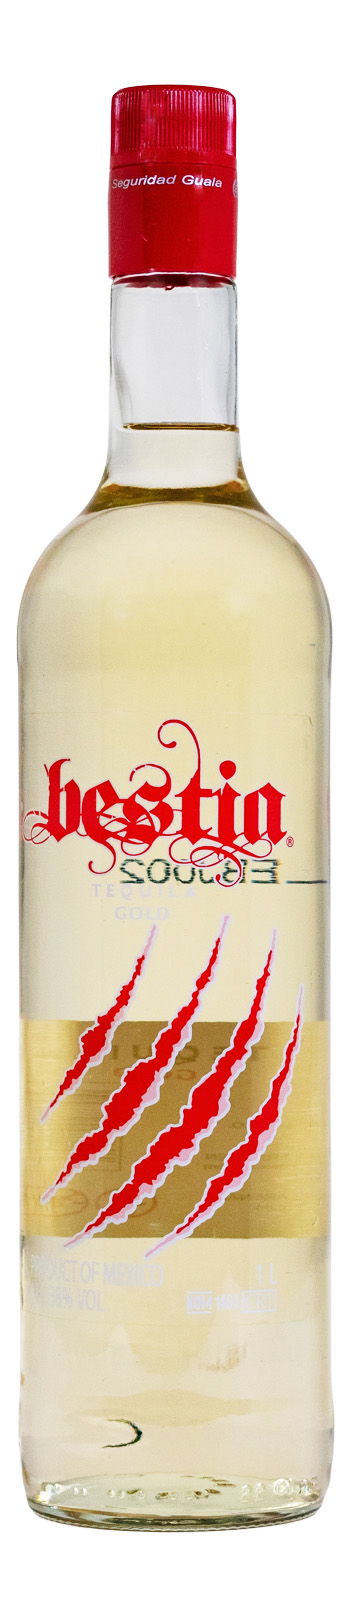 Bestia Tequila Reposado - 1 Liter 38% vol